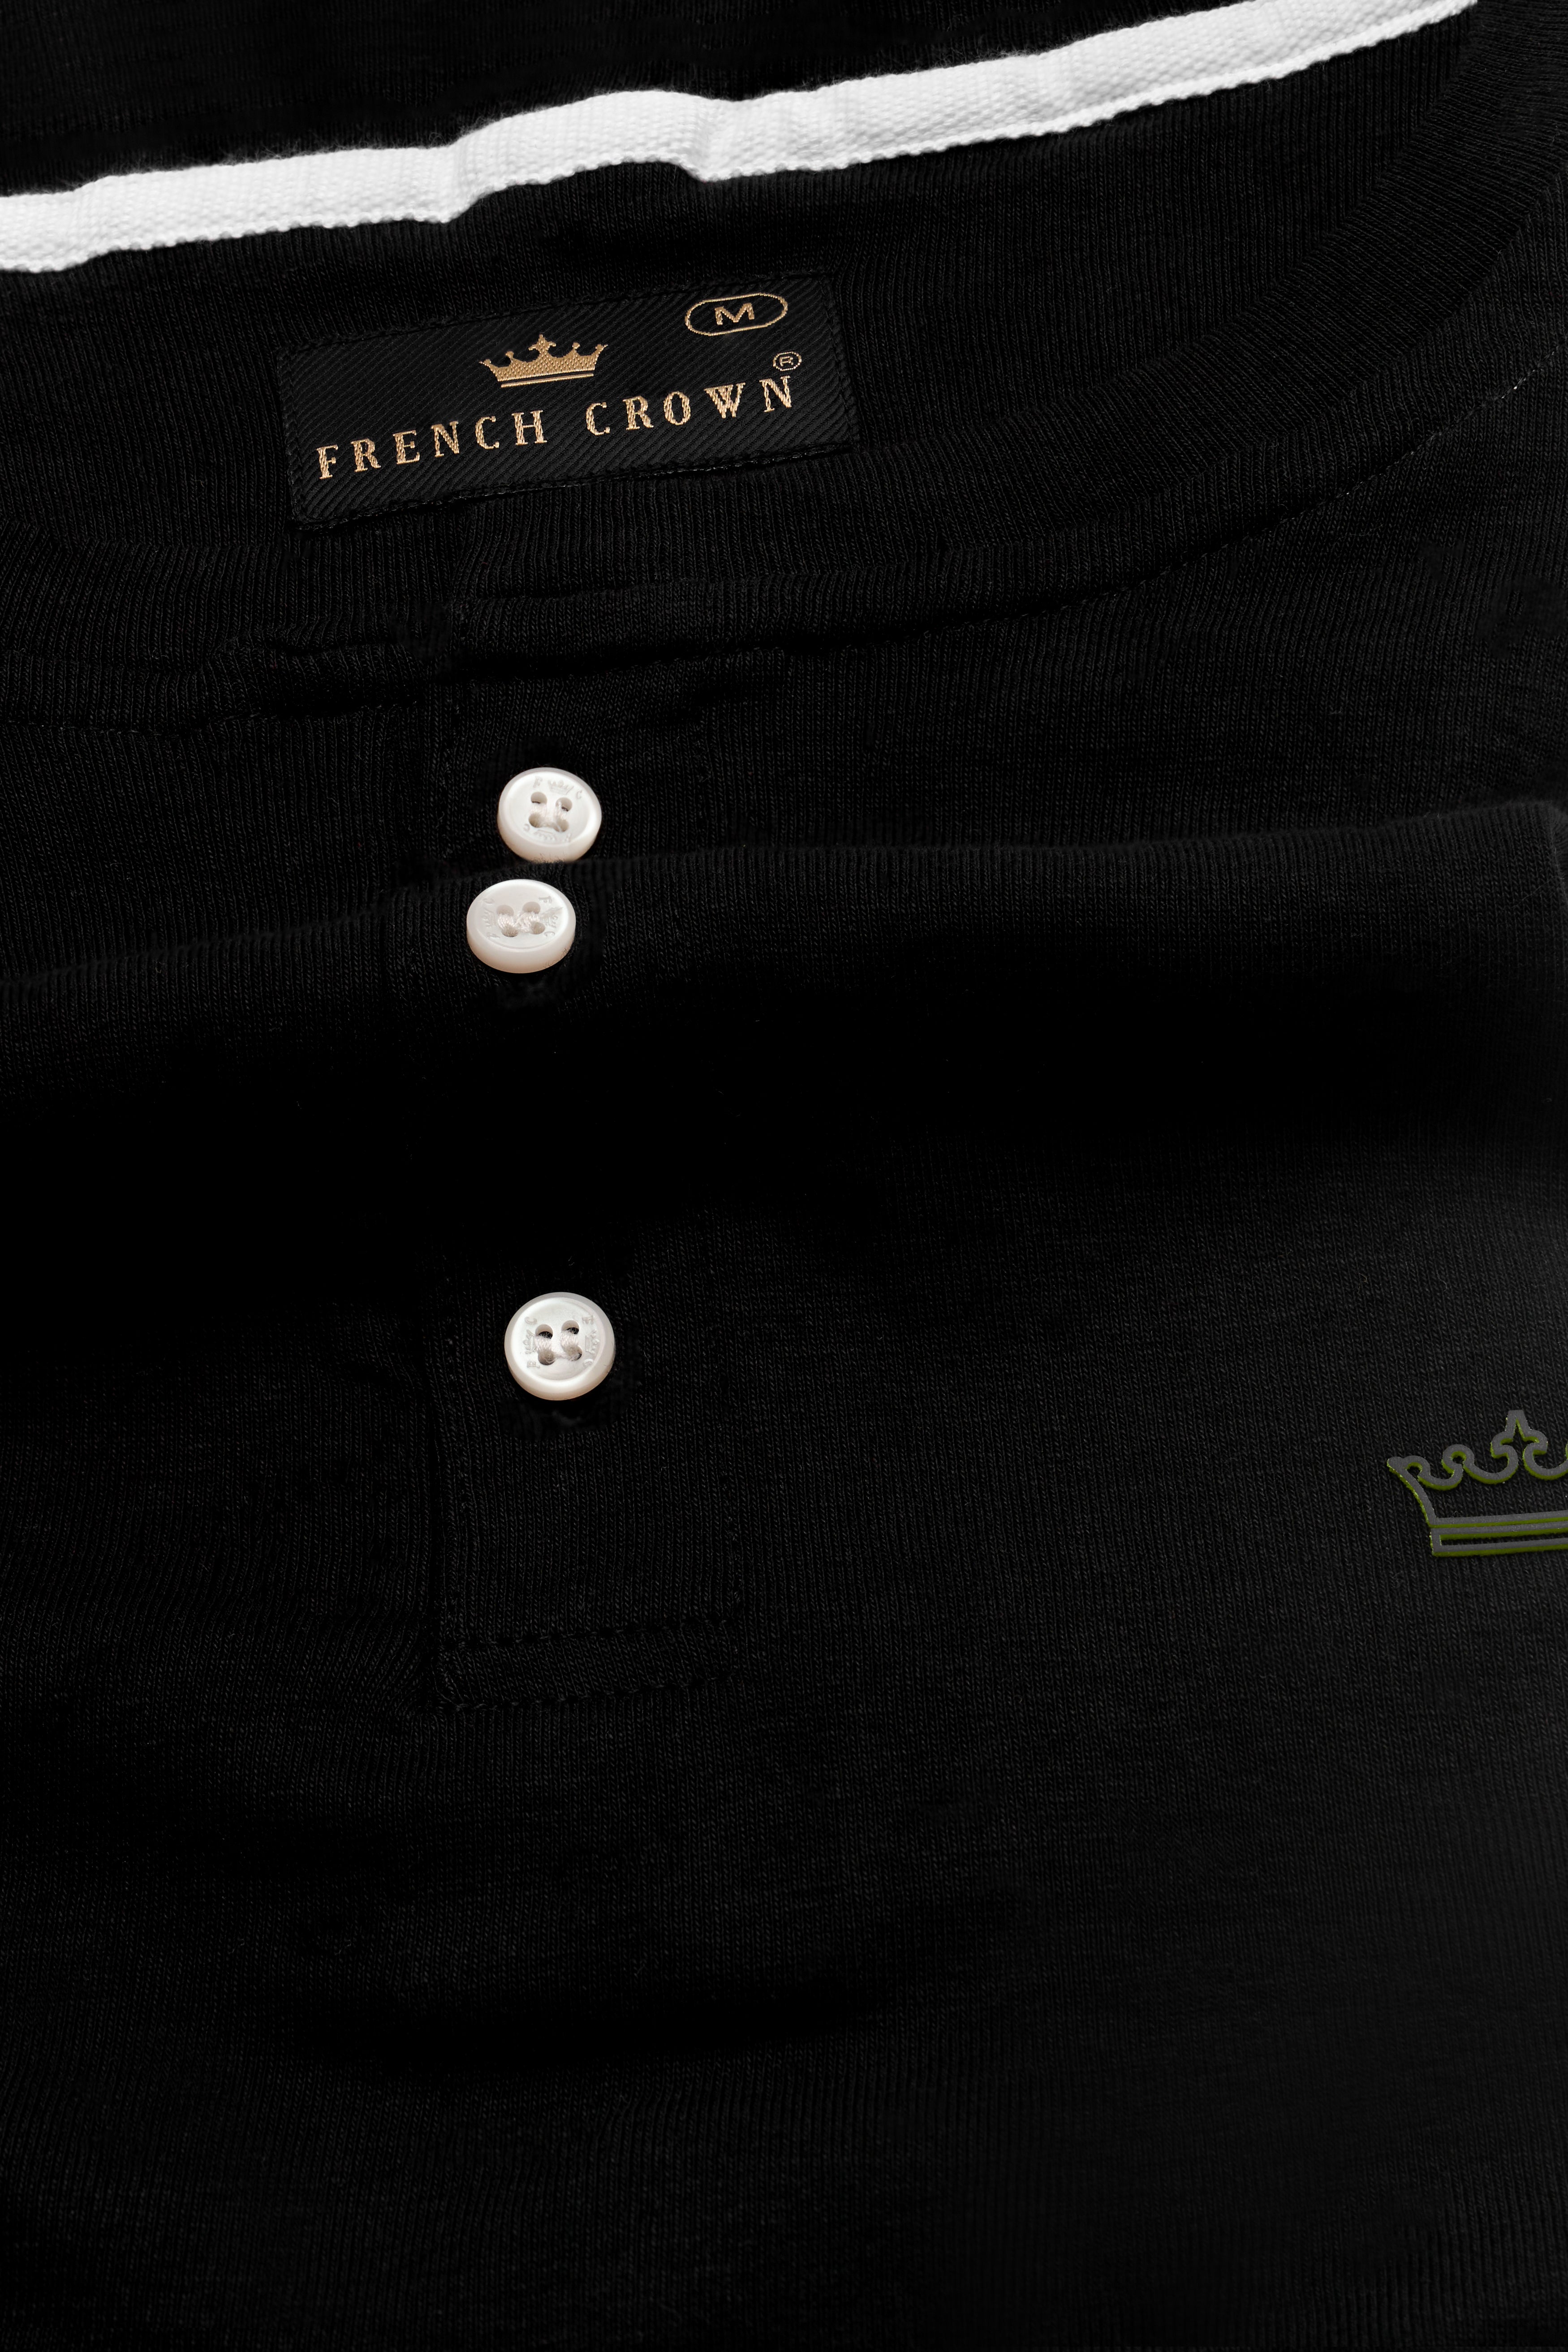 Jade Black Premium Cotton Round Neck T-Shirt TS916-S, TS916-M, TS916-L, TS916-XL, TS916-XXL